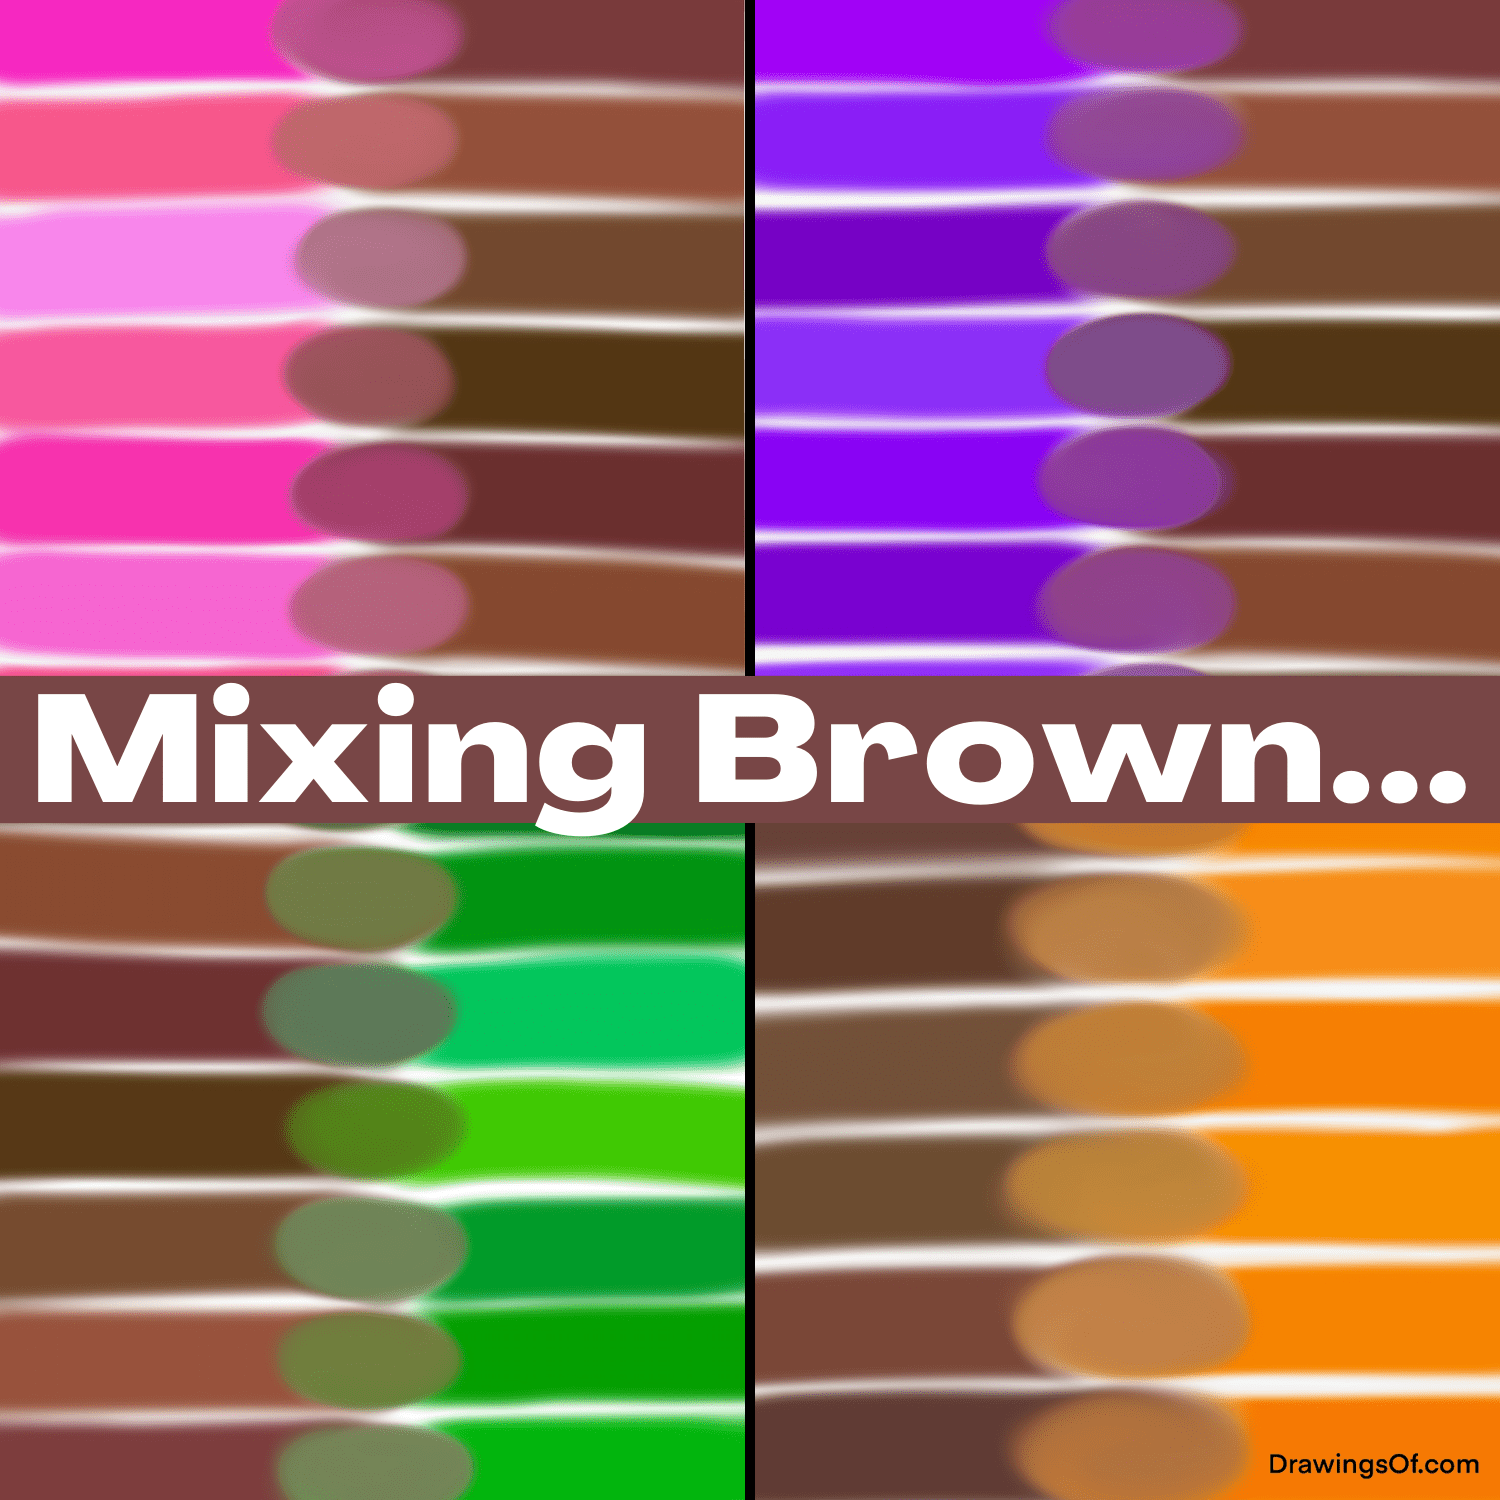 Mixing brown